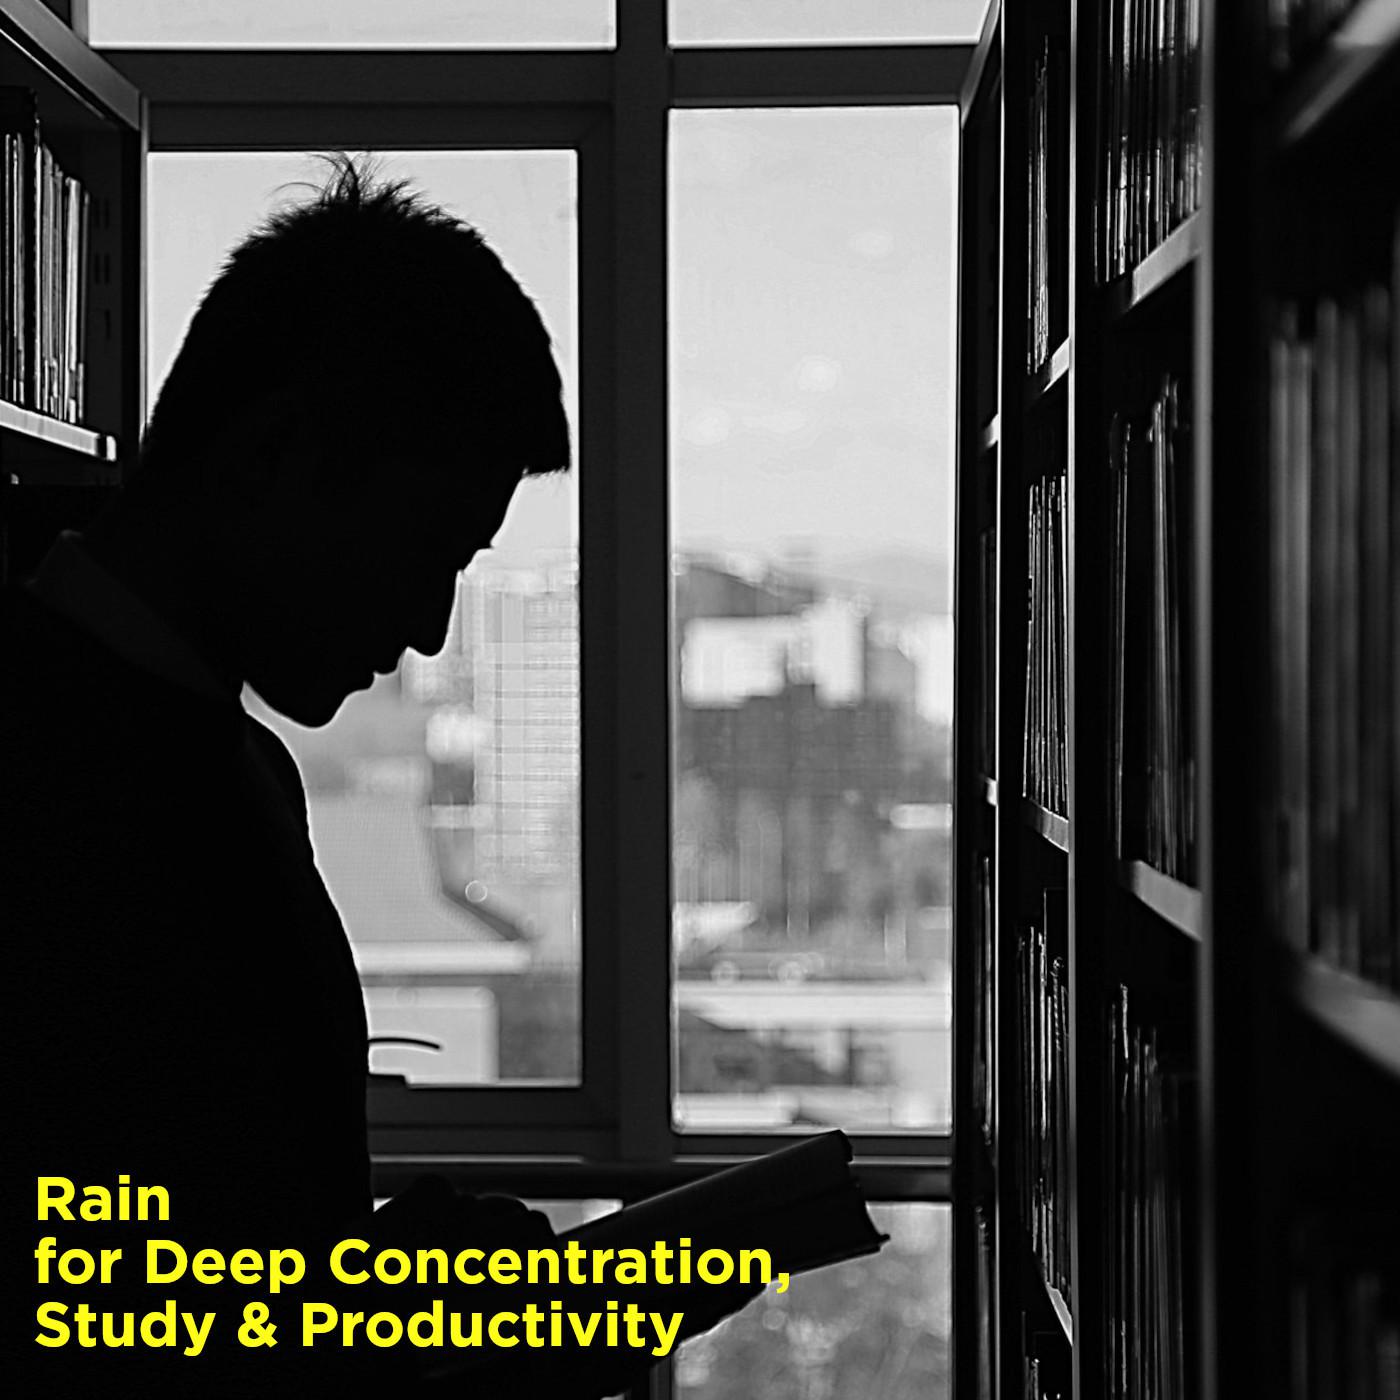 Rain for Deep Concentration, Study & Productivity